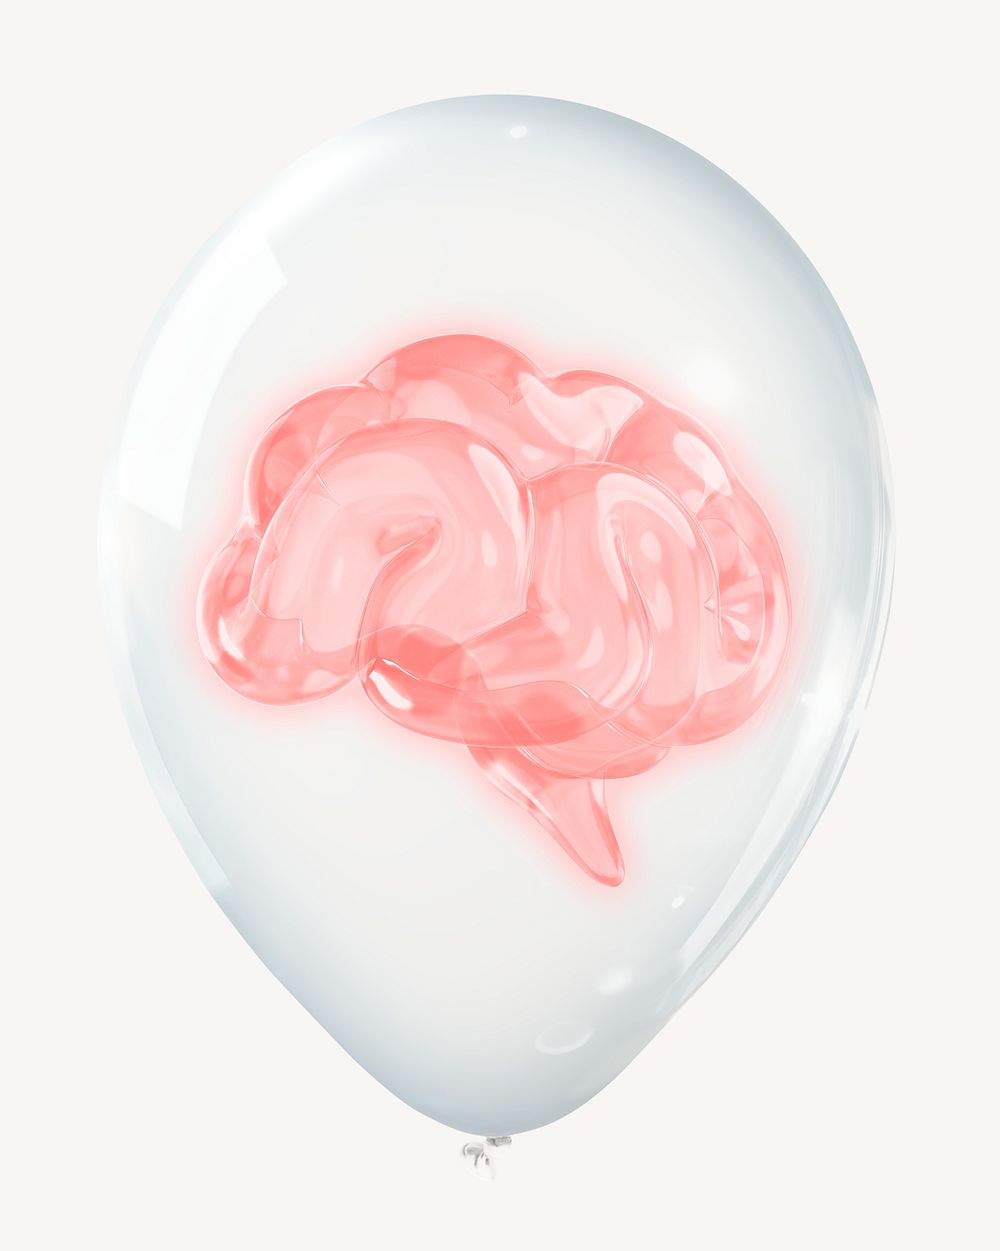 Brain 3D balloon collage element psd